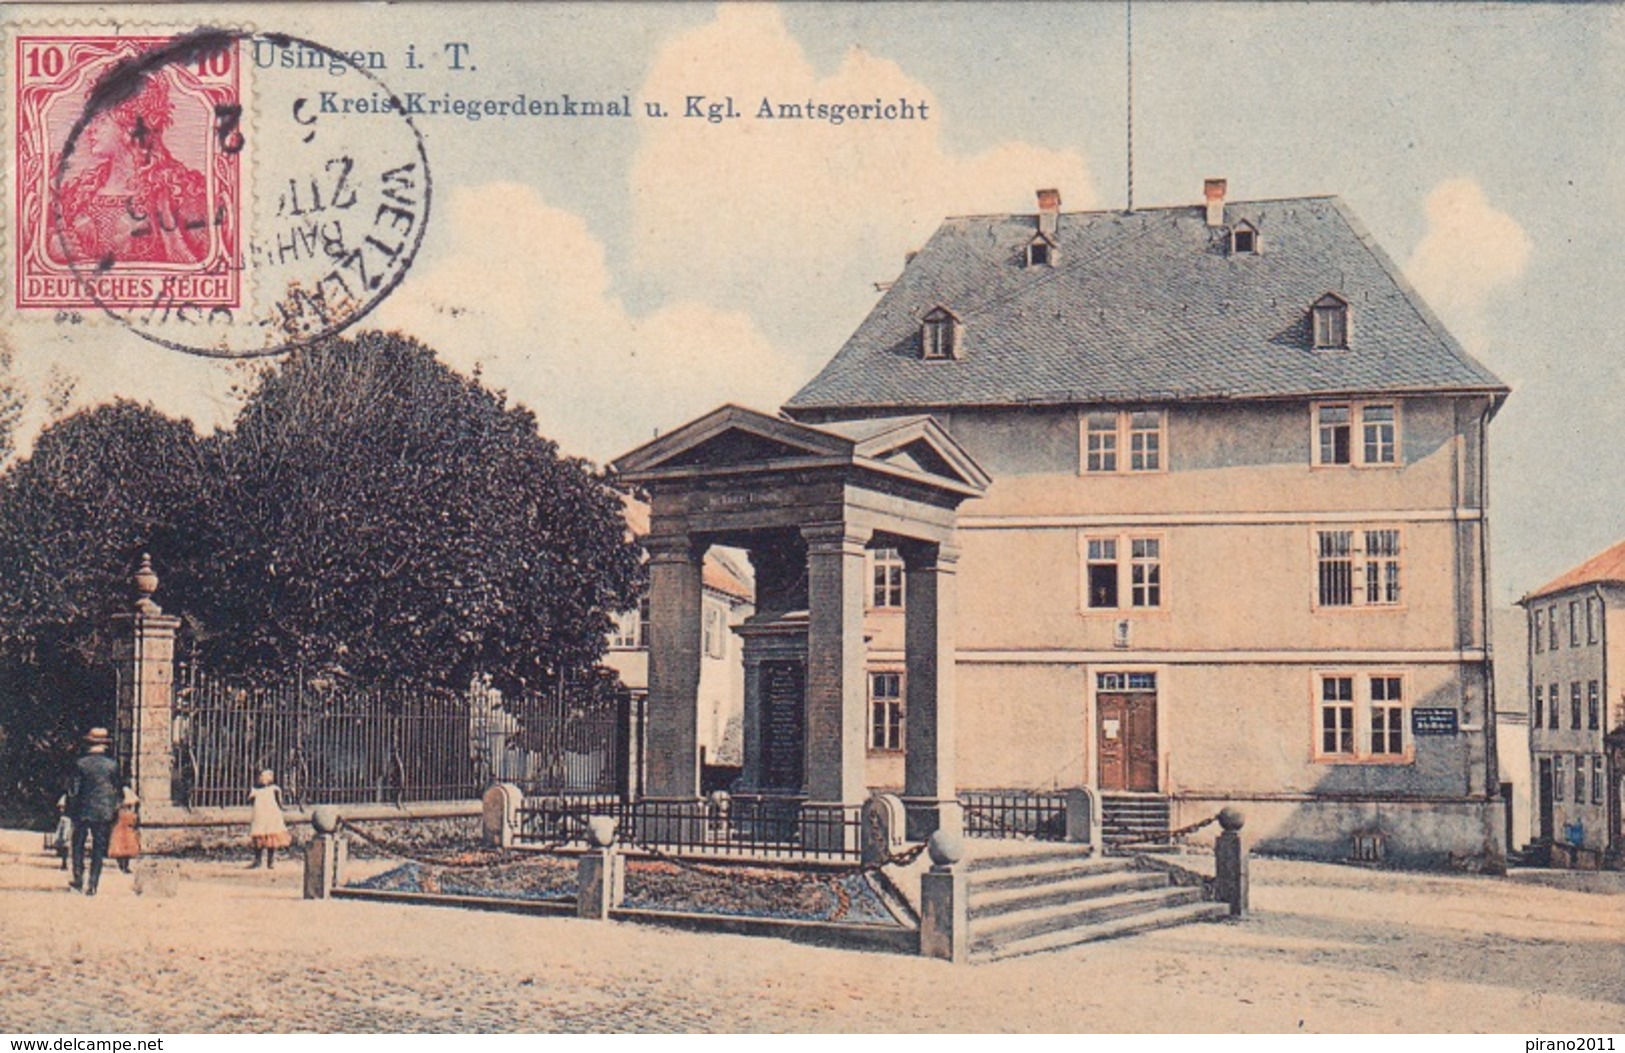 Usingen, Kreis Kriegerdenkmal & Kgl. Amtsgericht - Usingen